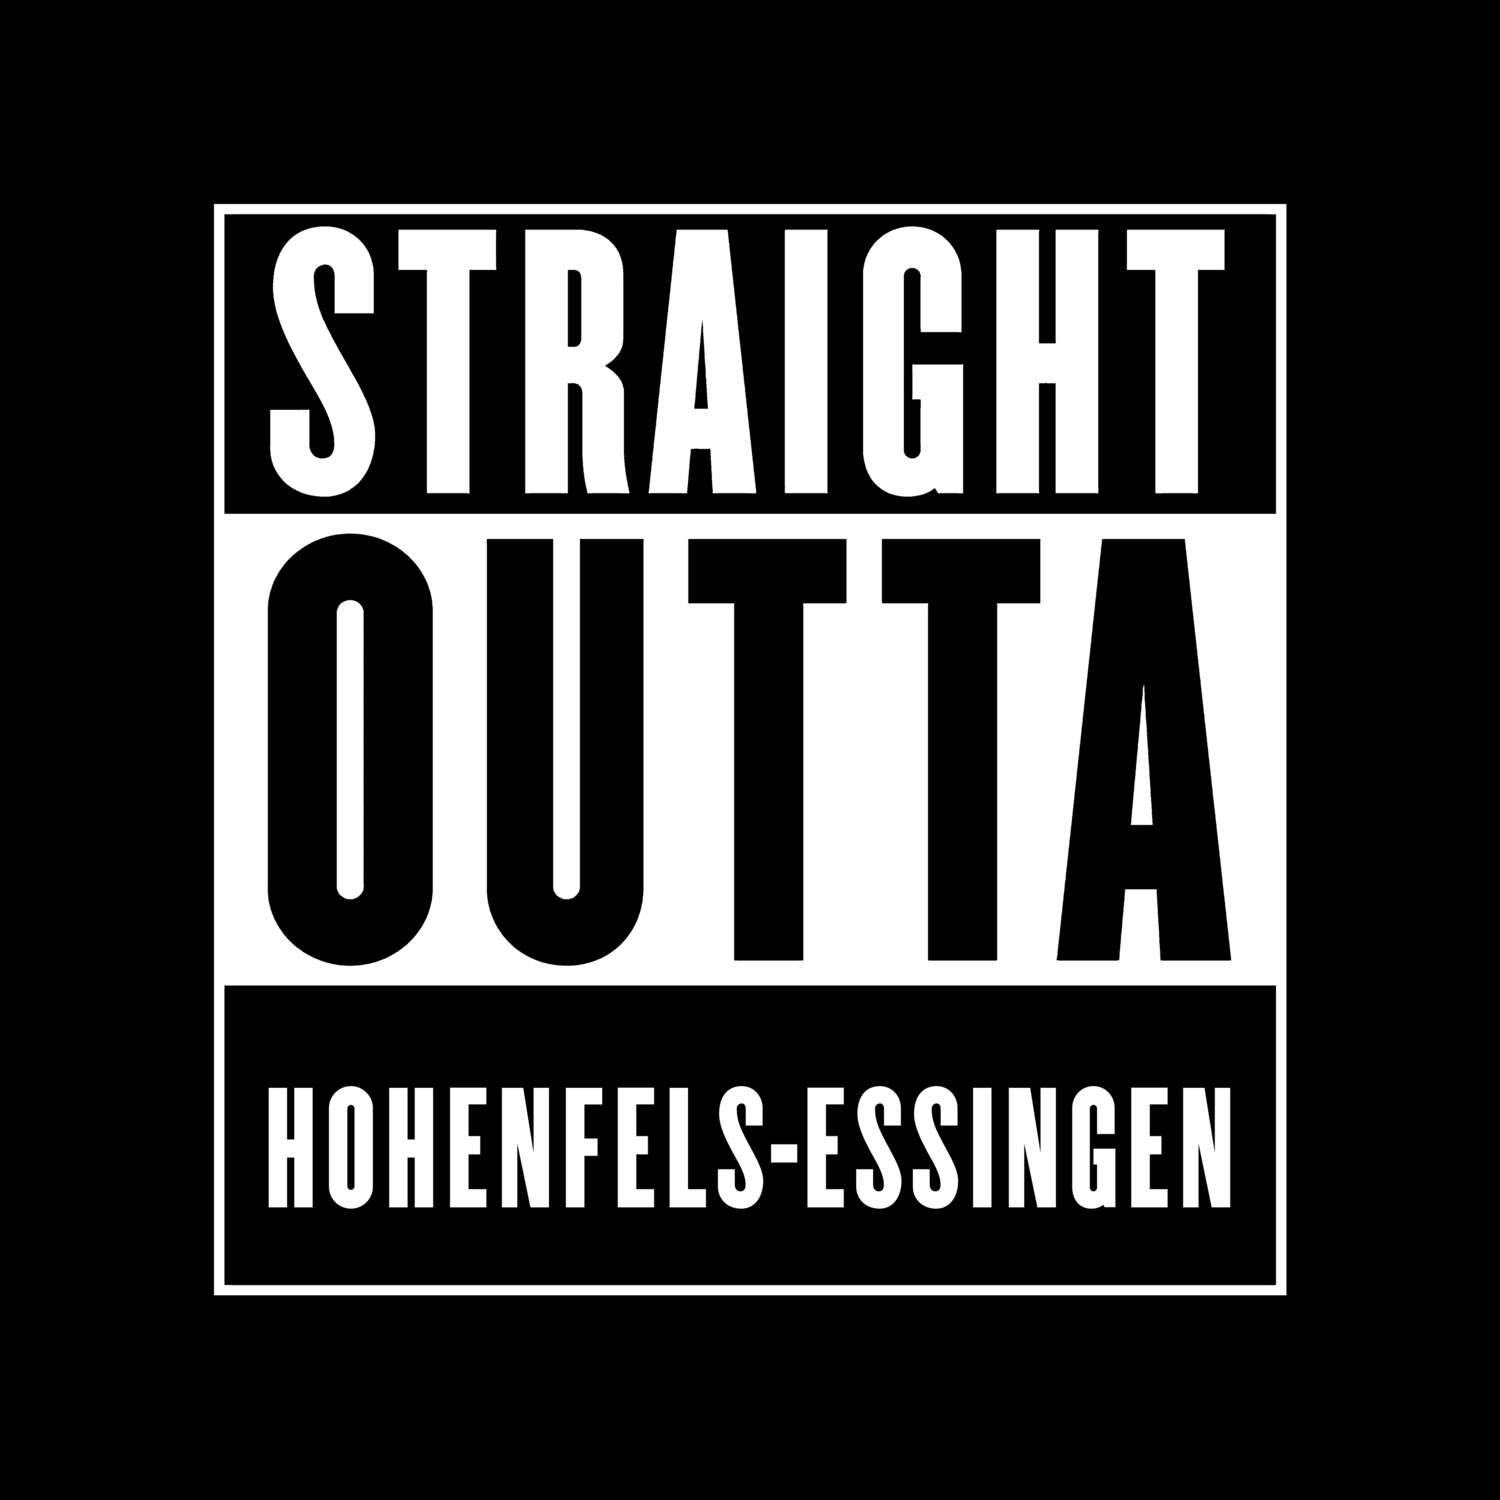 Hohenfels-Essingen T-Shirt »Straight Outta«